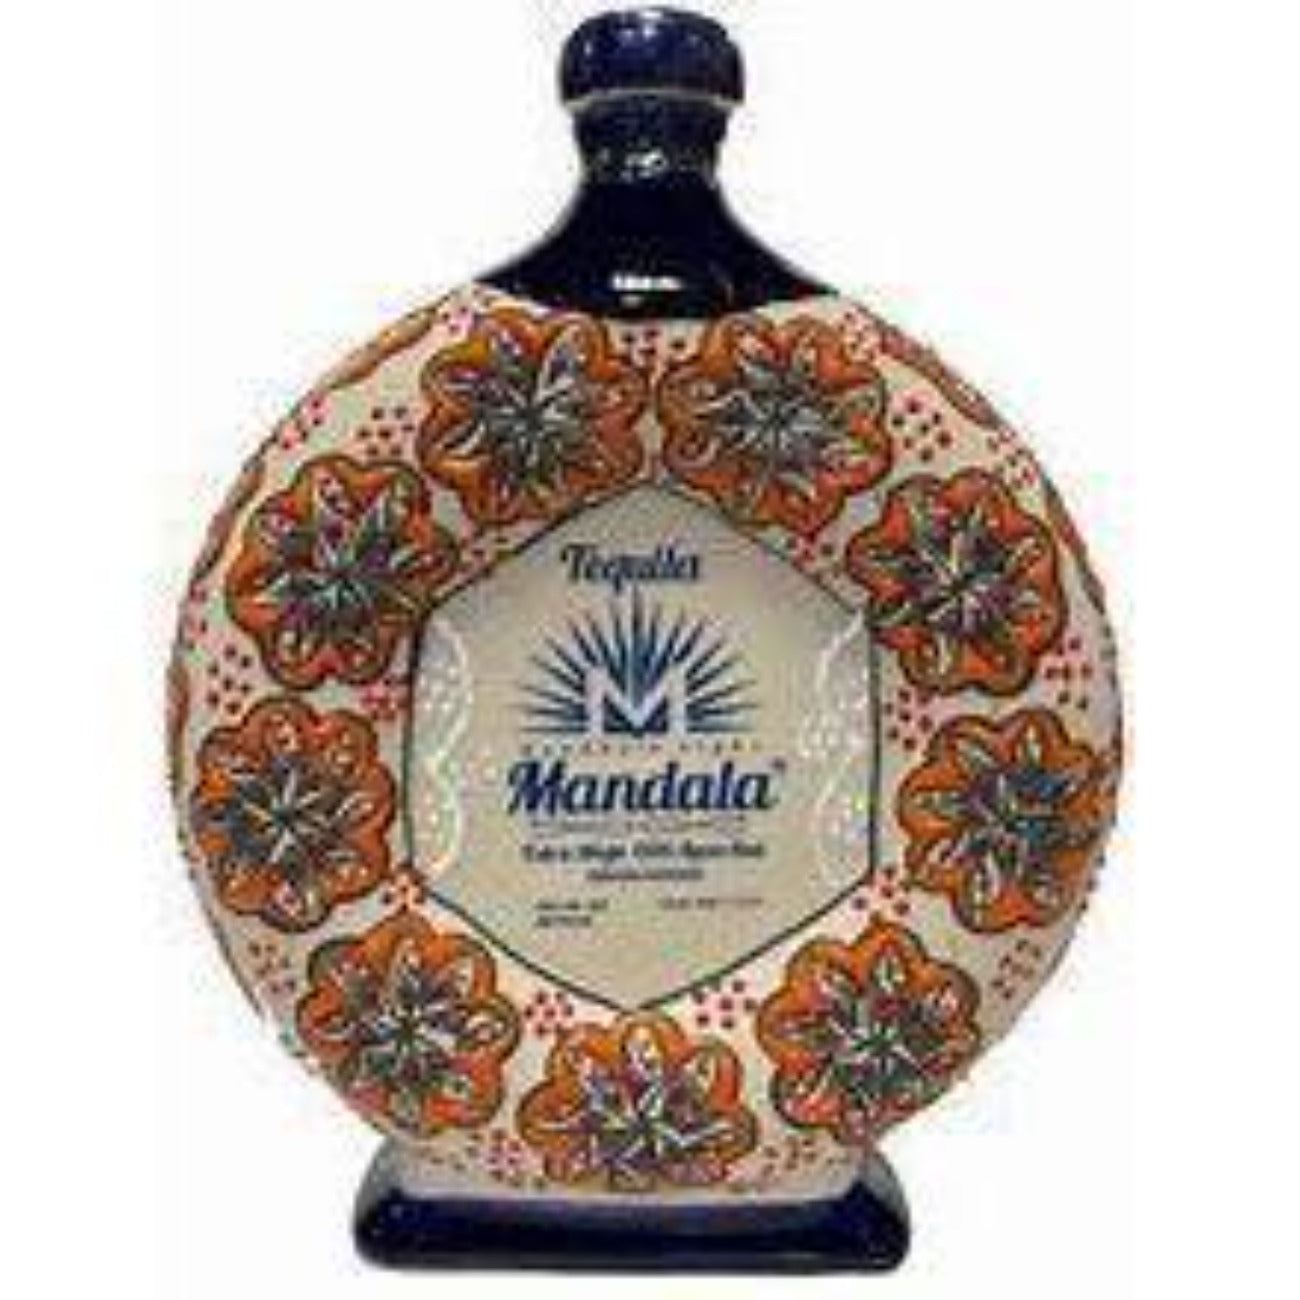 Mandala Extra Anejo Tequila - TOPBOURBON